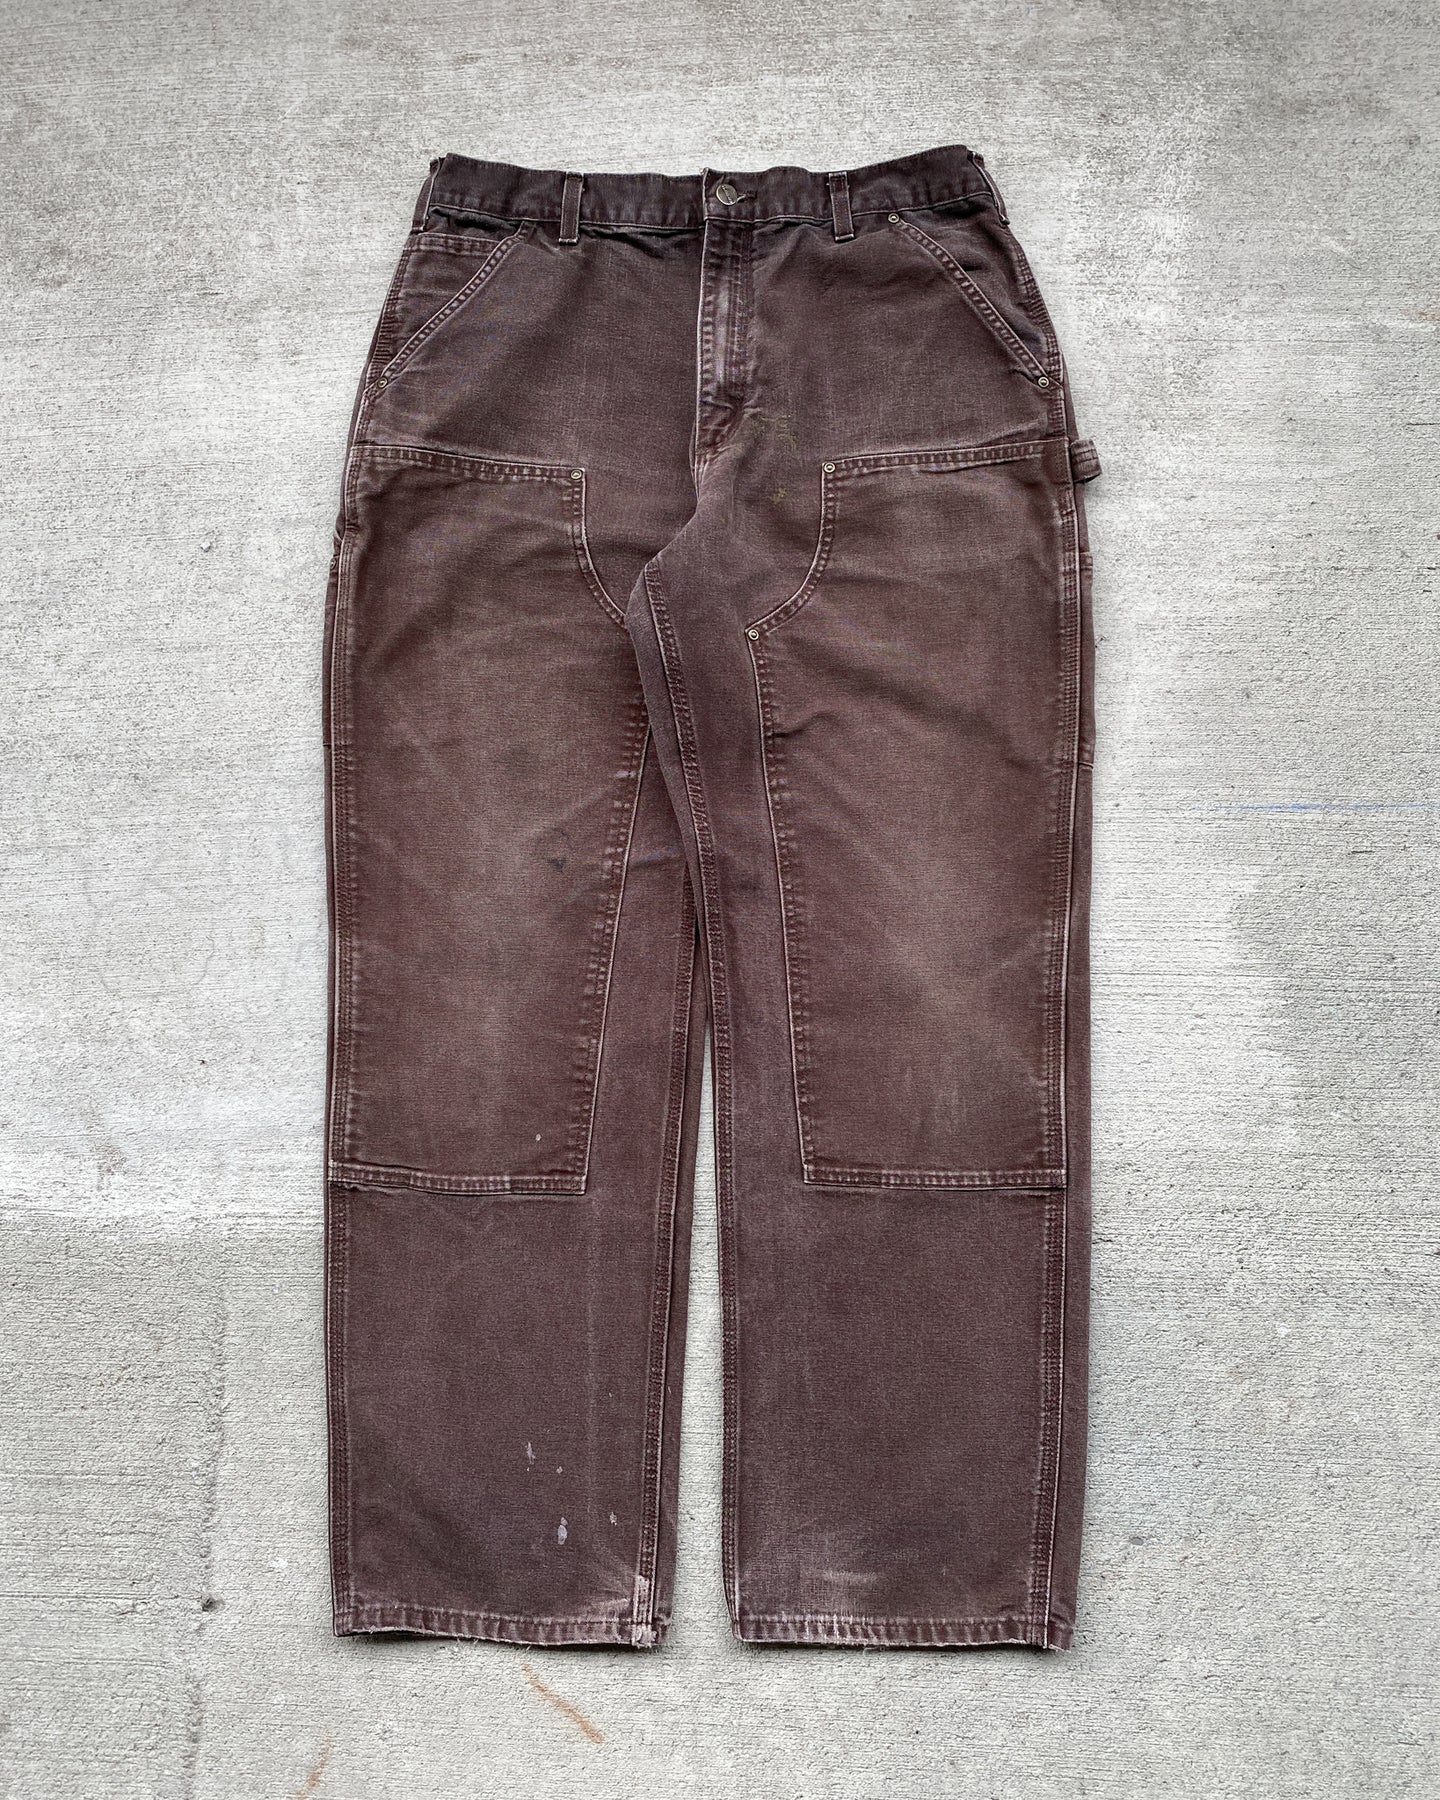 Carhartt Mud Brown Double Knee Work Pants - Size 34 x 32